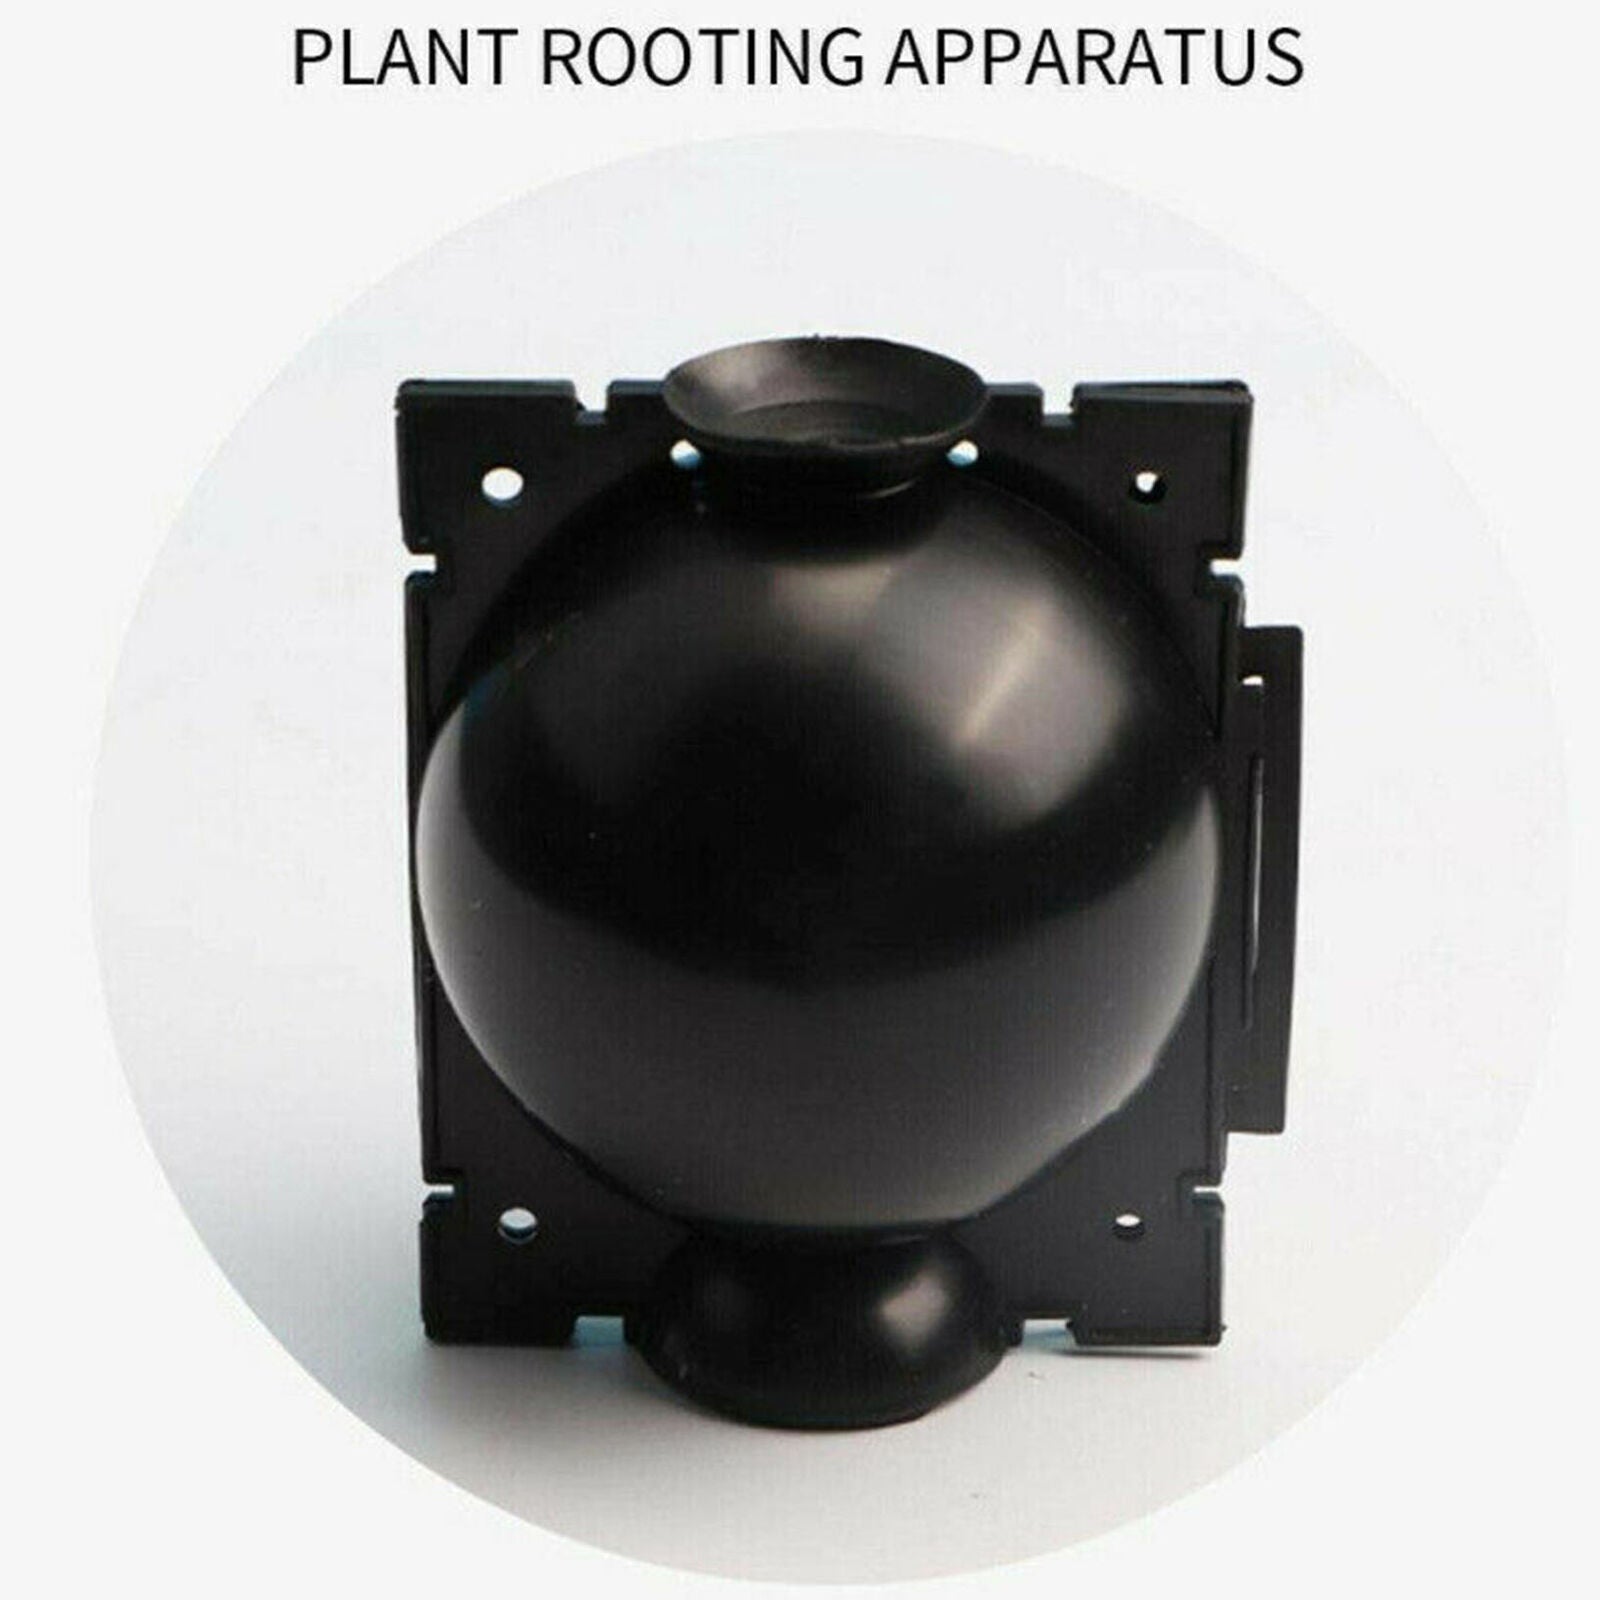 10x Plant Rooting Device High Pressure Propagation Ball High Pressure Box Graft